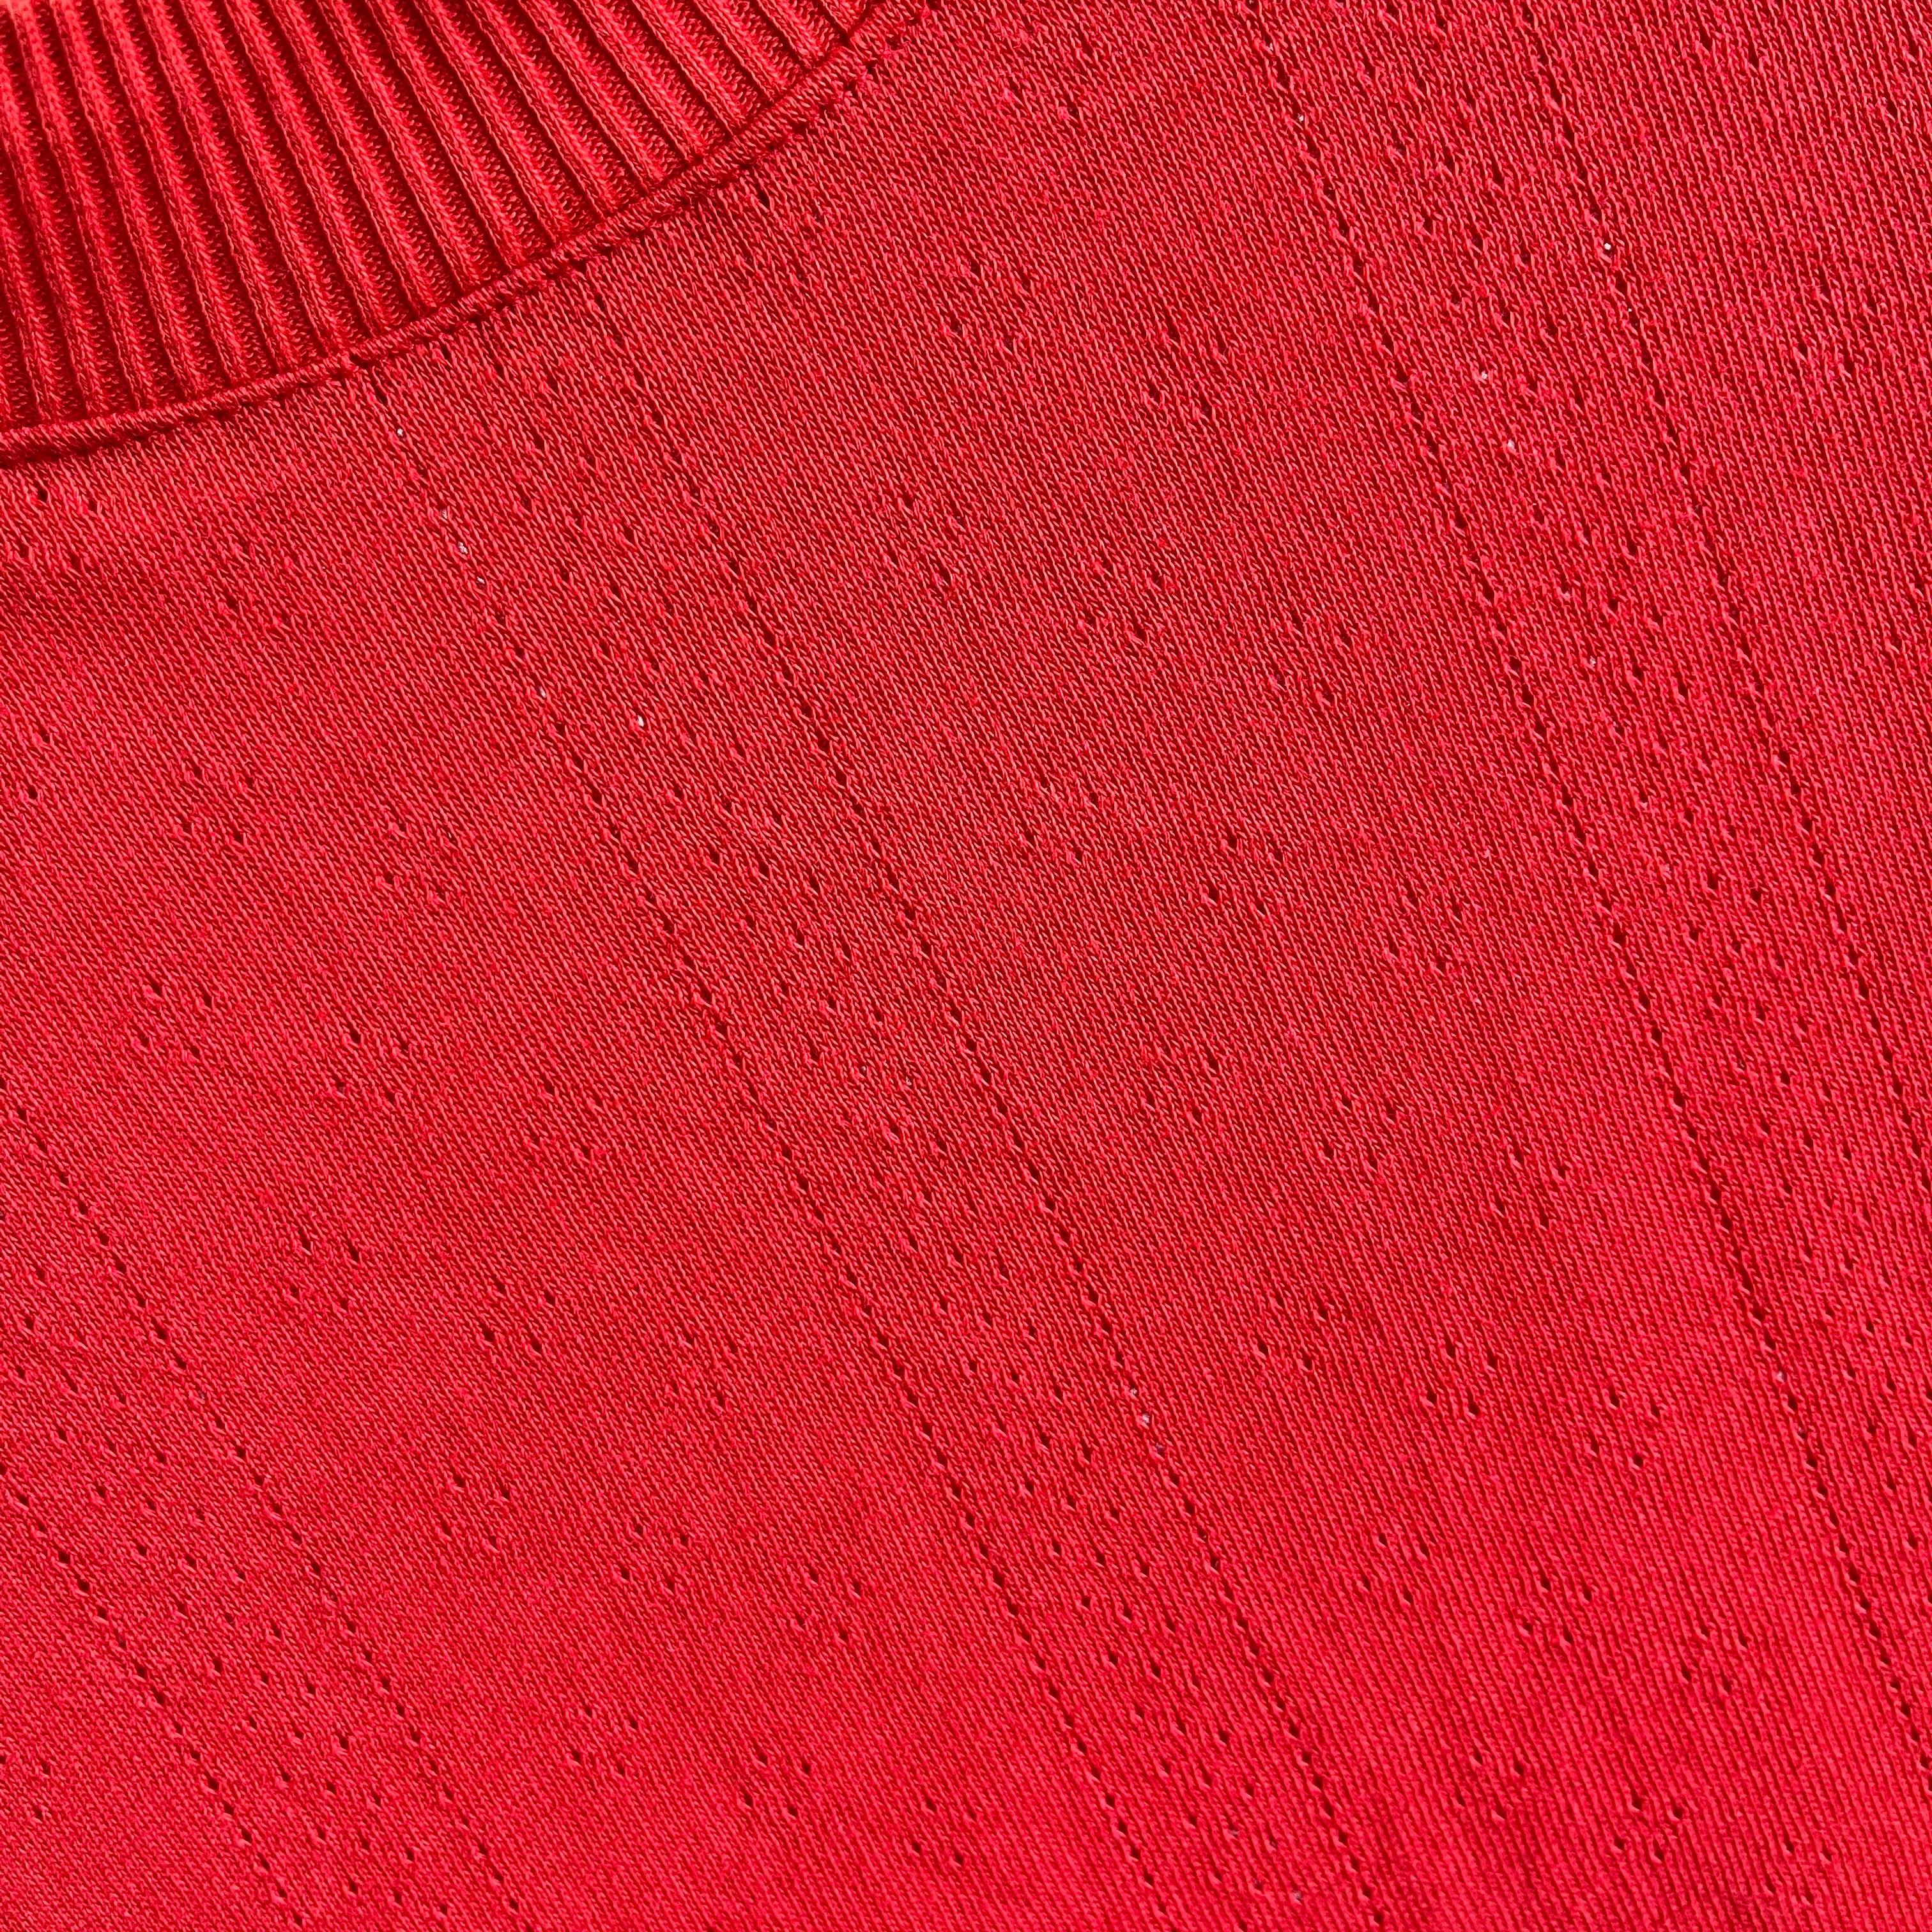 GG Super Cool Mock Neck Small Eye Lit Detail Red T-Shirt